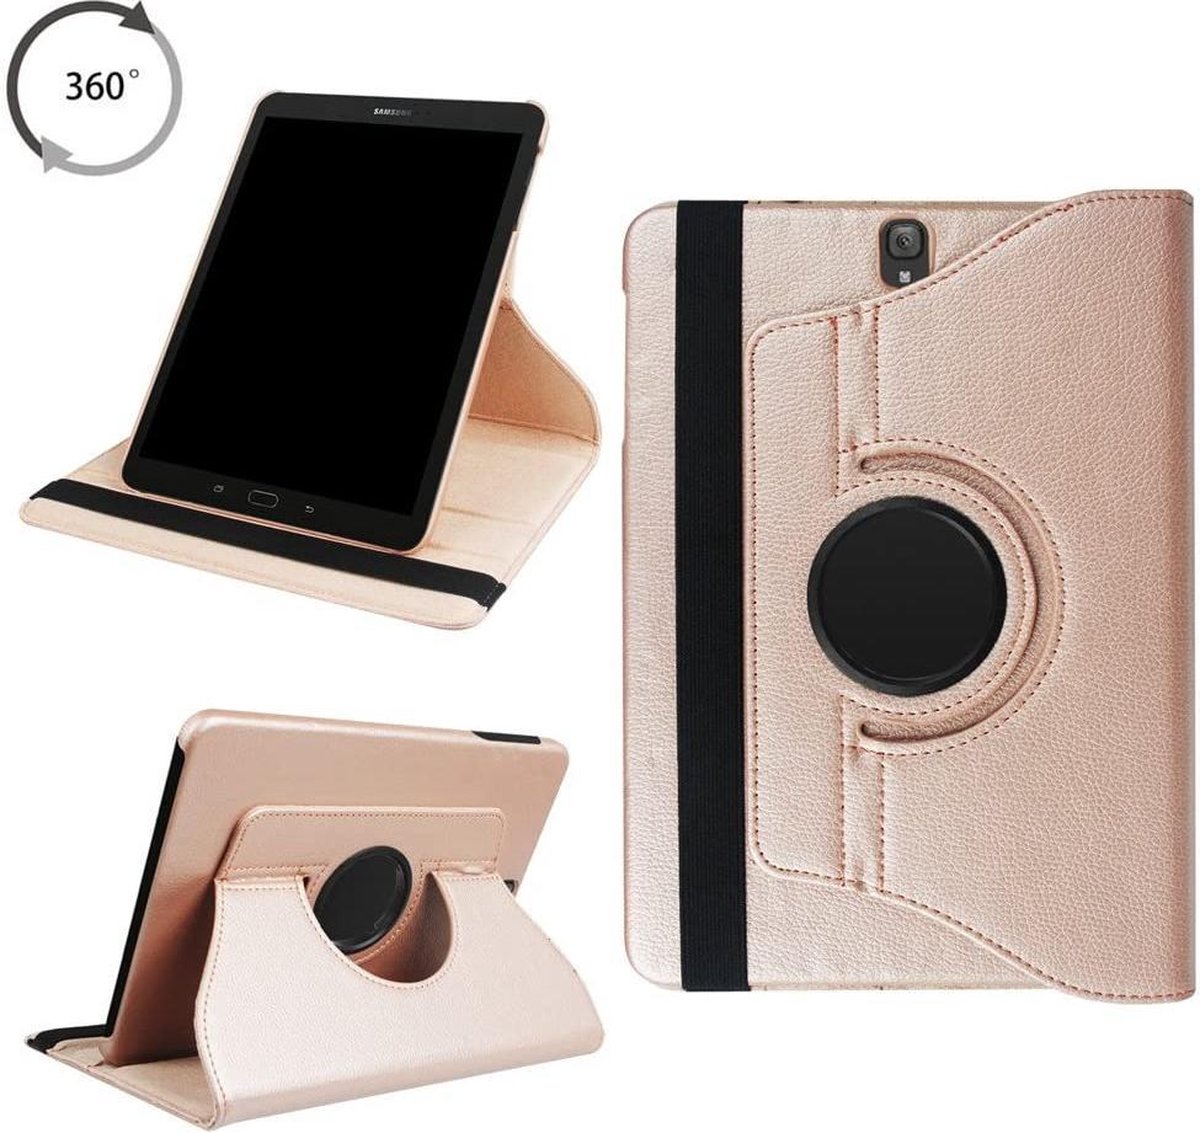 Draaibaar Hoesje - Rotation Tabletcase - Multi stand Case Geschikt voor: Samsung Galaxy Tab A 10.1 inch T580 / T585 (2016 2018) - Rose goud - Ar202